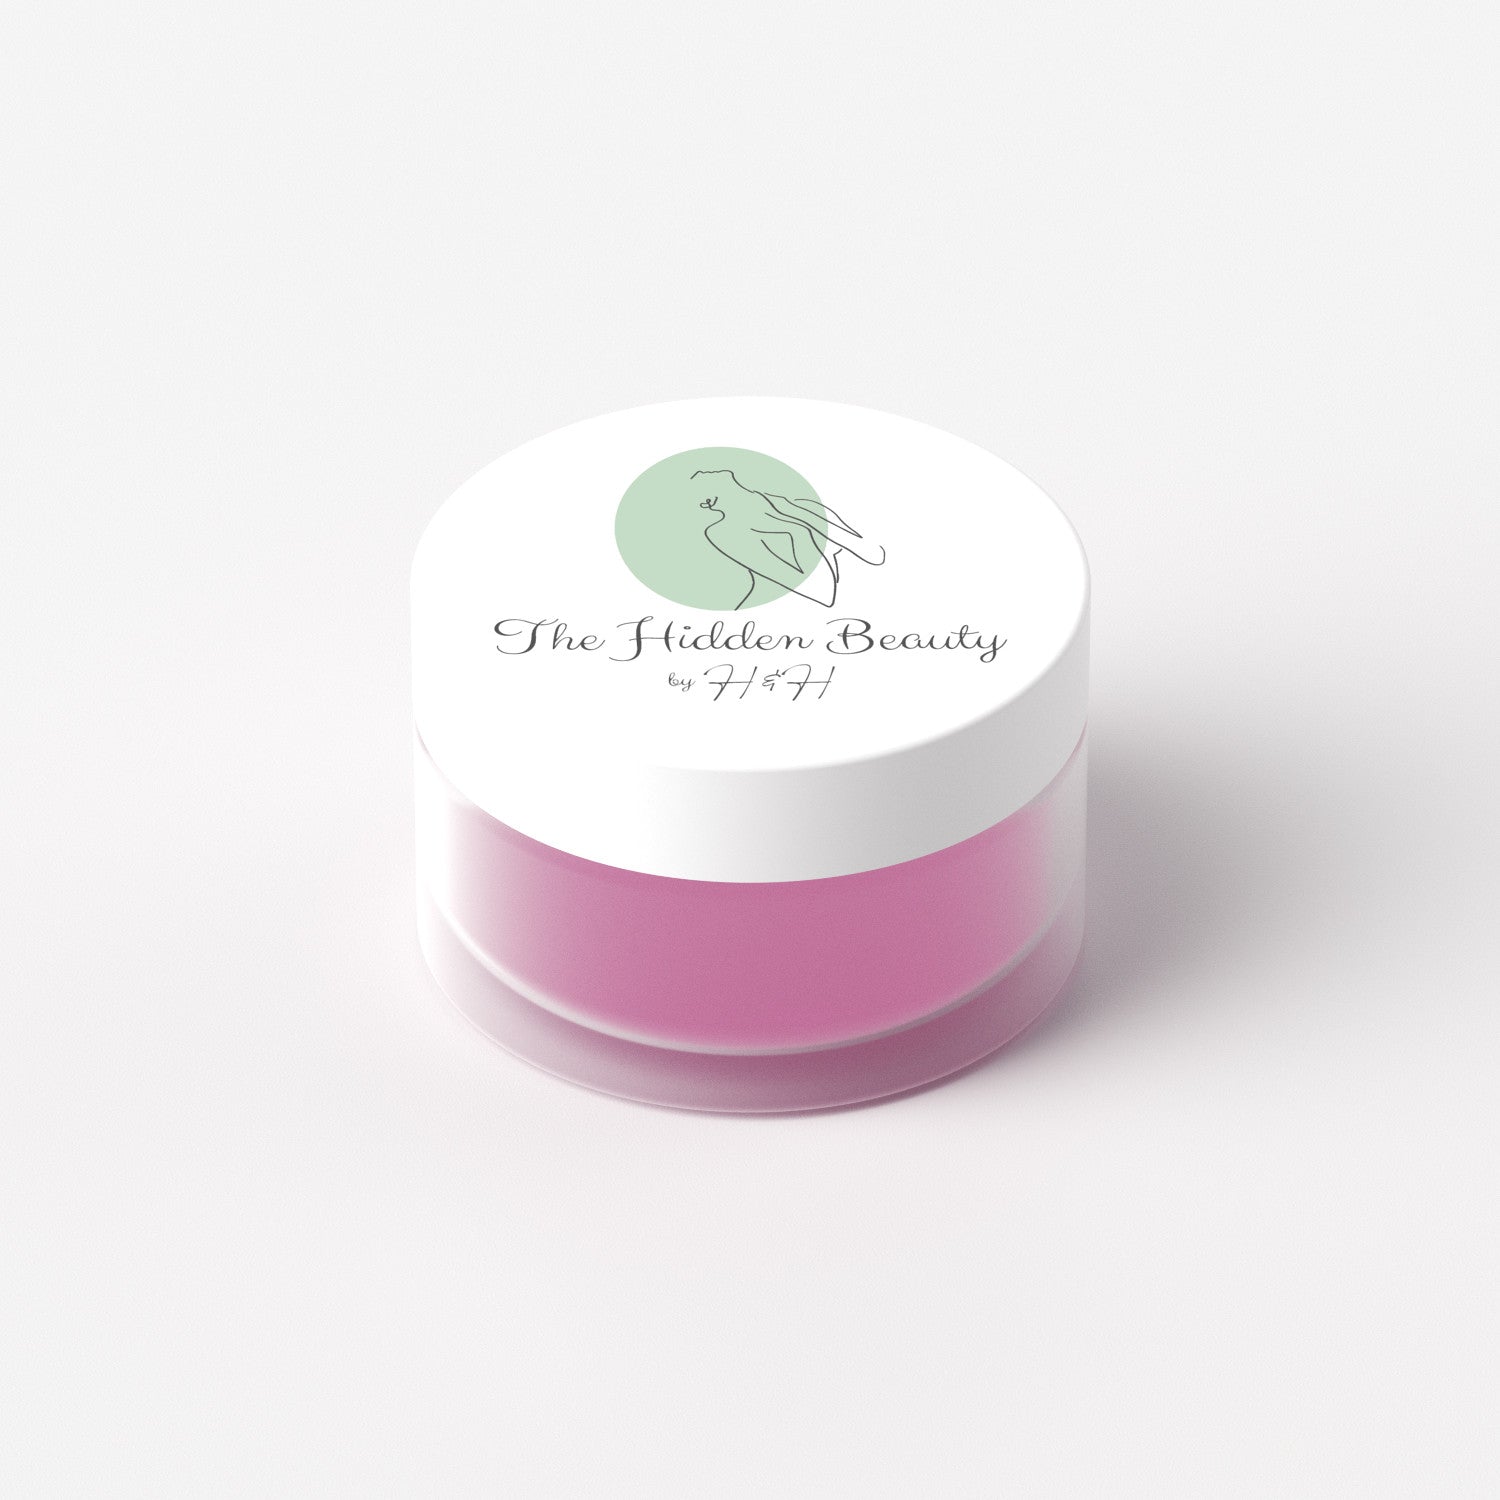 thehidden-beauty beauty product